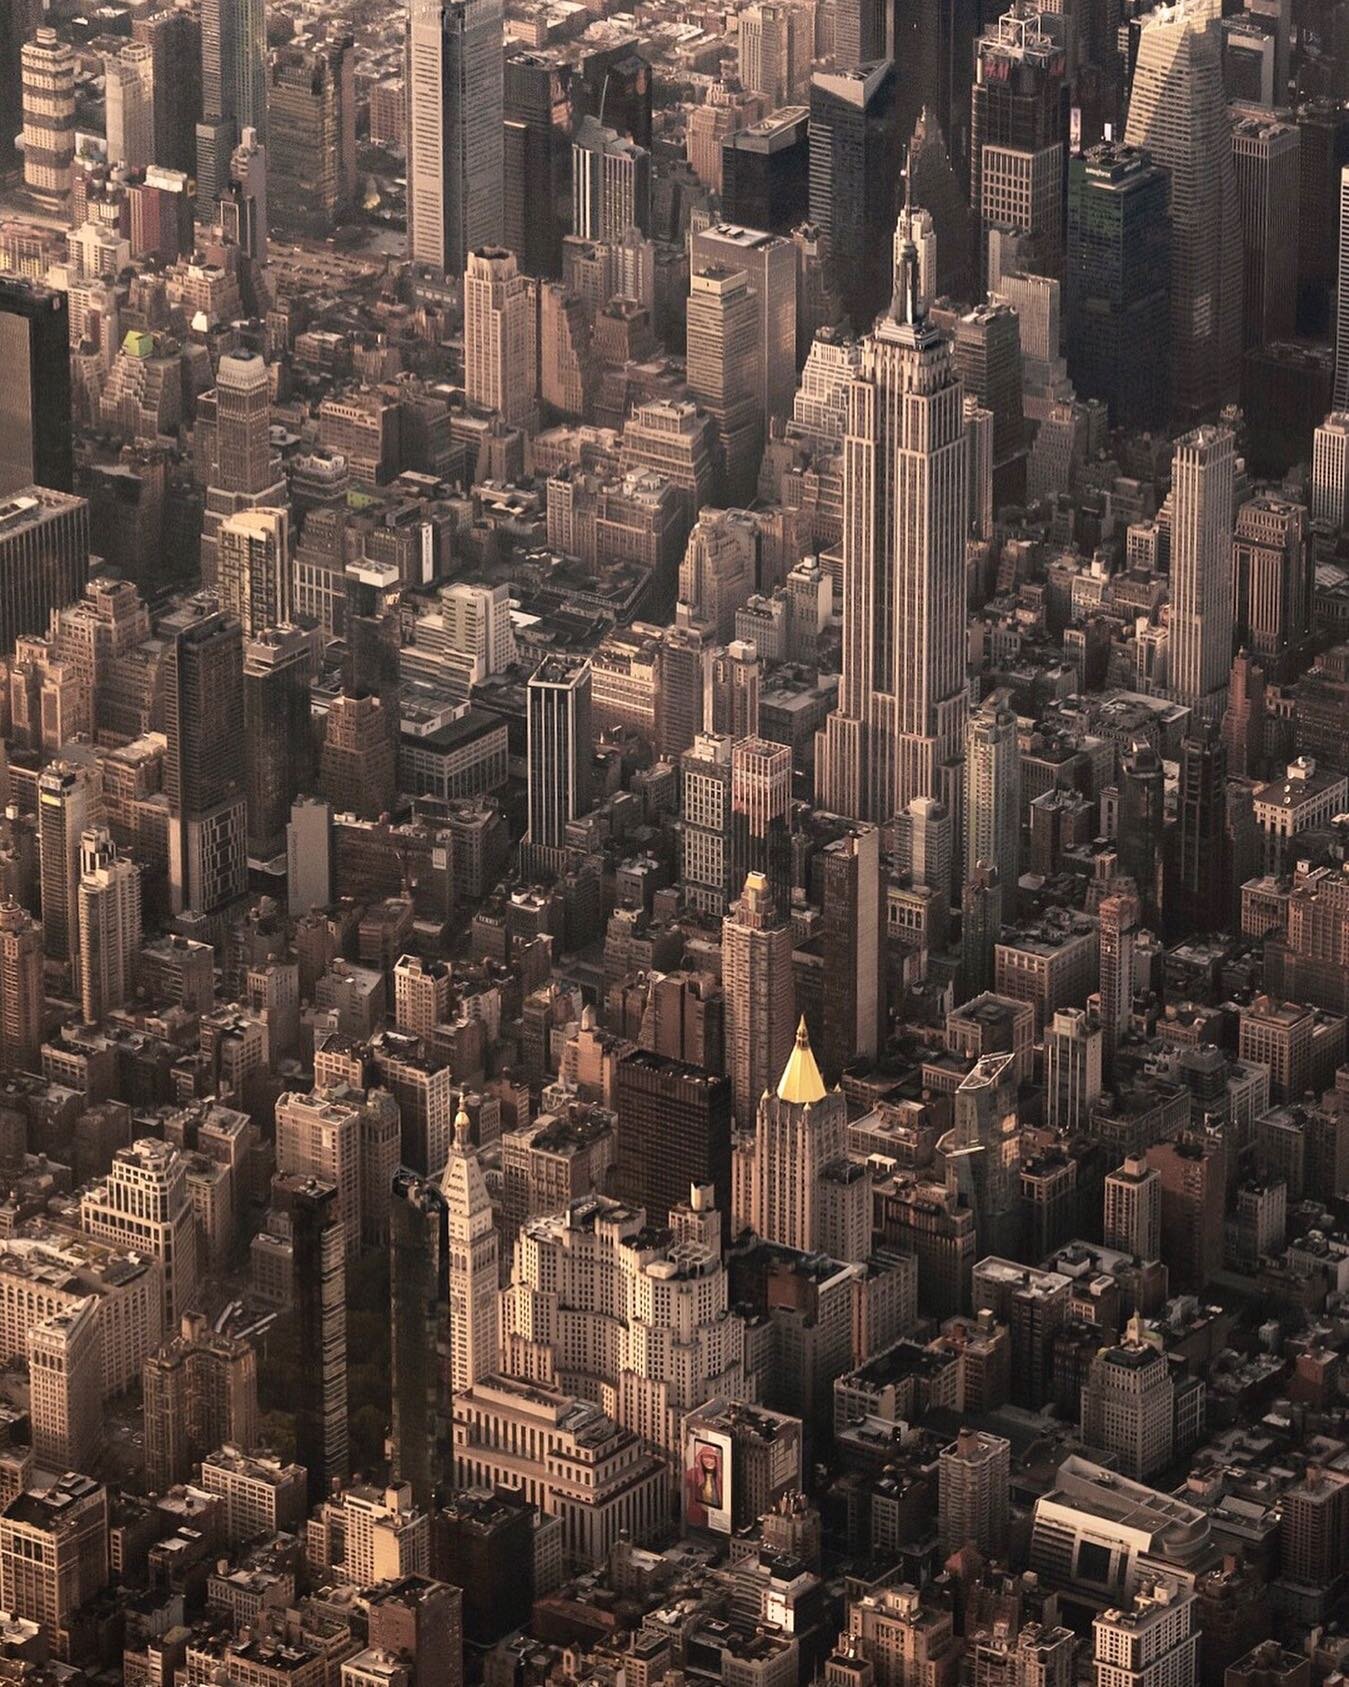 I&rsquo;m really missing this 7000 ft above NYC view! Gotta get back up there soon 🚁 
.⁠⠀⠀⁠⠀
.⁠⠀⠀⁠⠀
.⁠⠀⠀⁠⠀
.⁠⠀⠀⁠⠀
.⁠⠀⠀⁠⠀
#empirestatebuilding #artofvisuals #nyc #newyorkcity #visualambassadors #natgeotravel #nybucketlist #city_of_newyork #made_in_ny